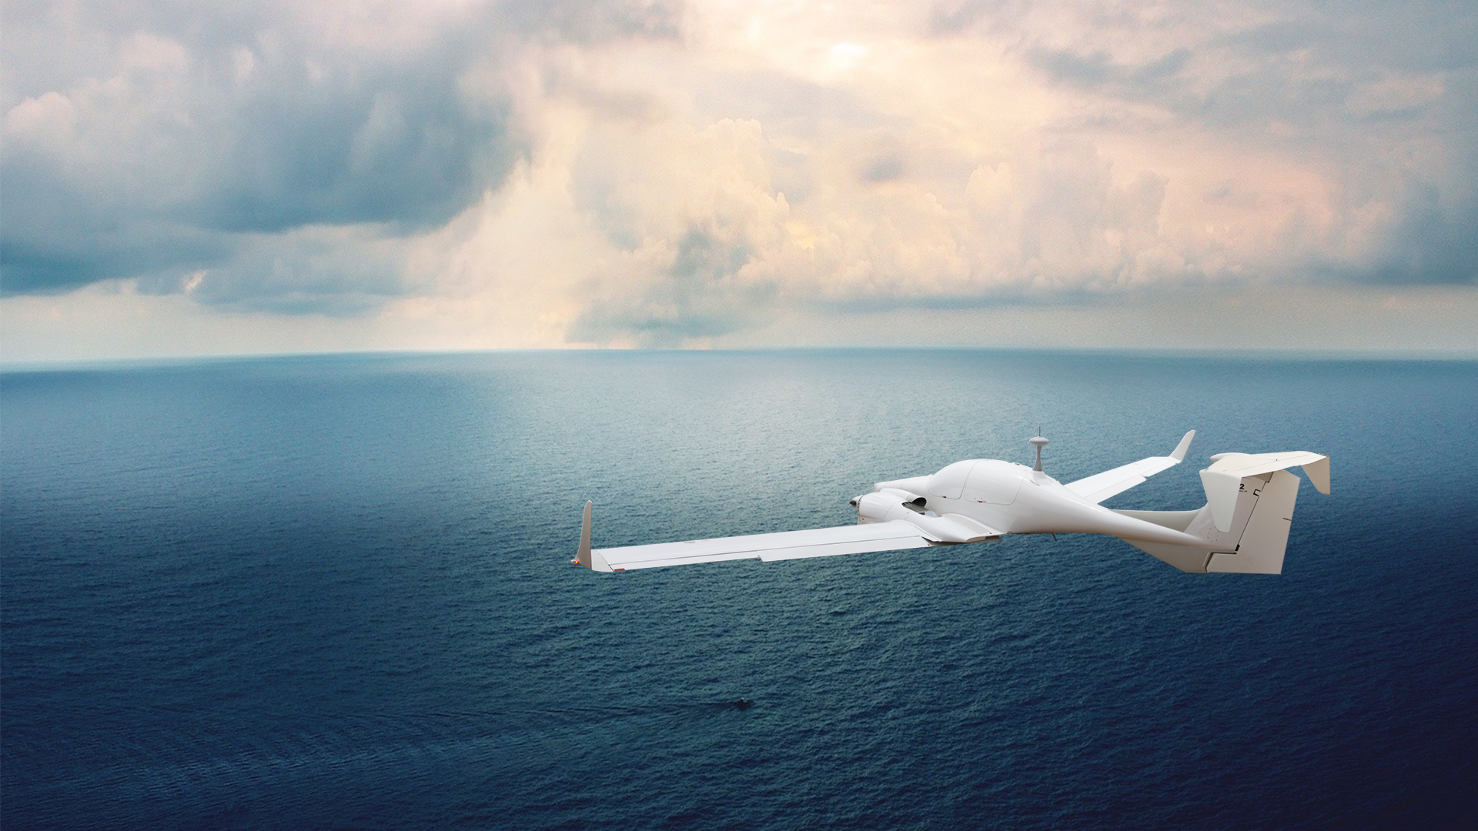 Rafael acquires the UAV company Aeronautics